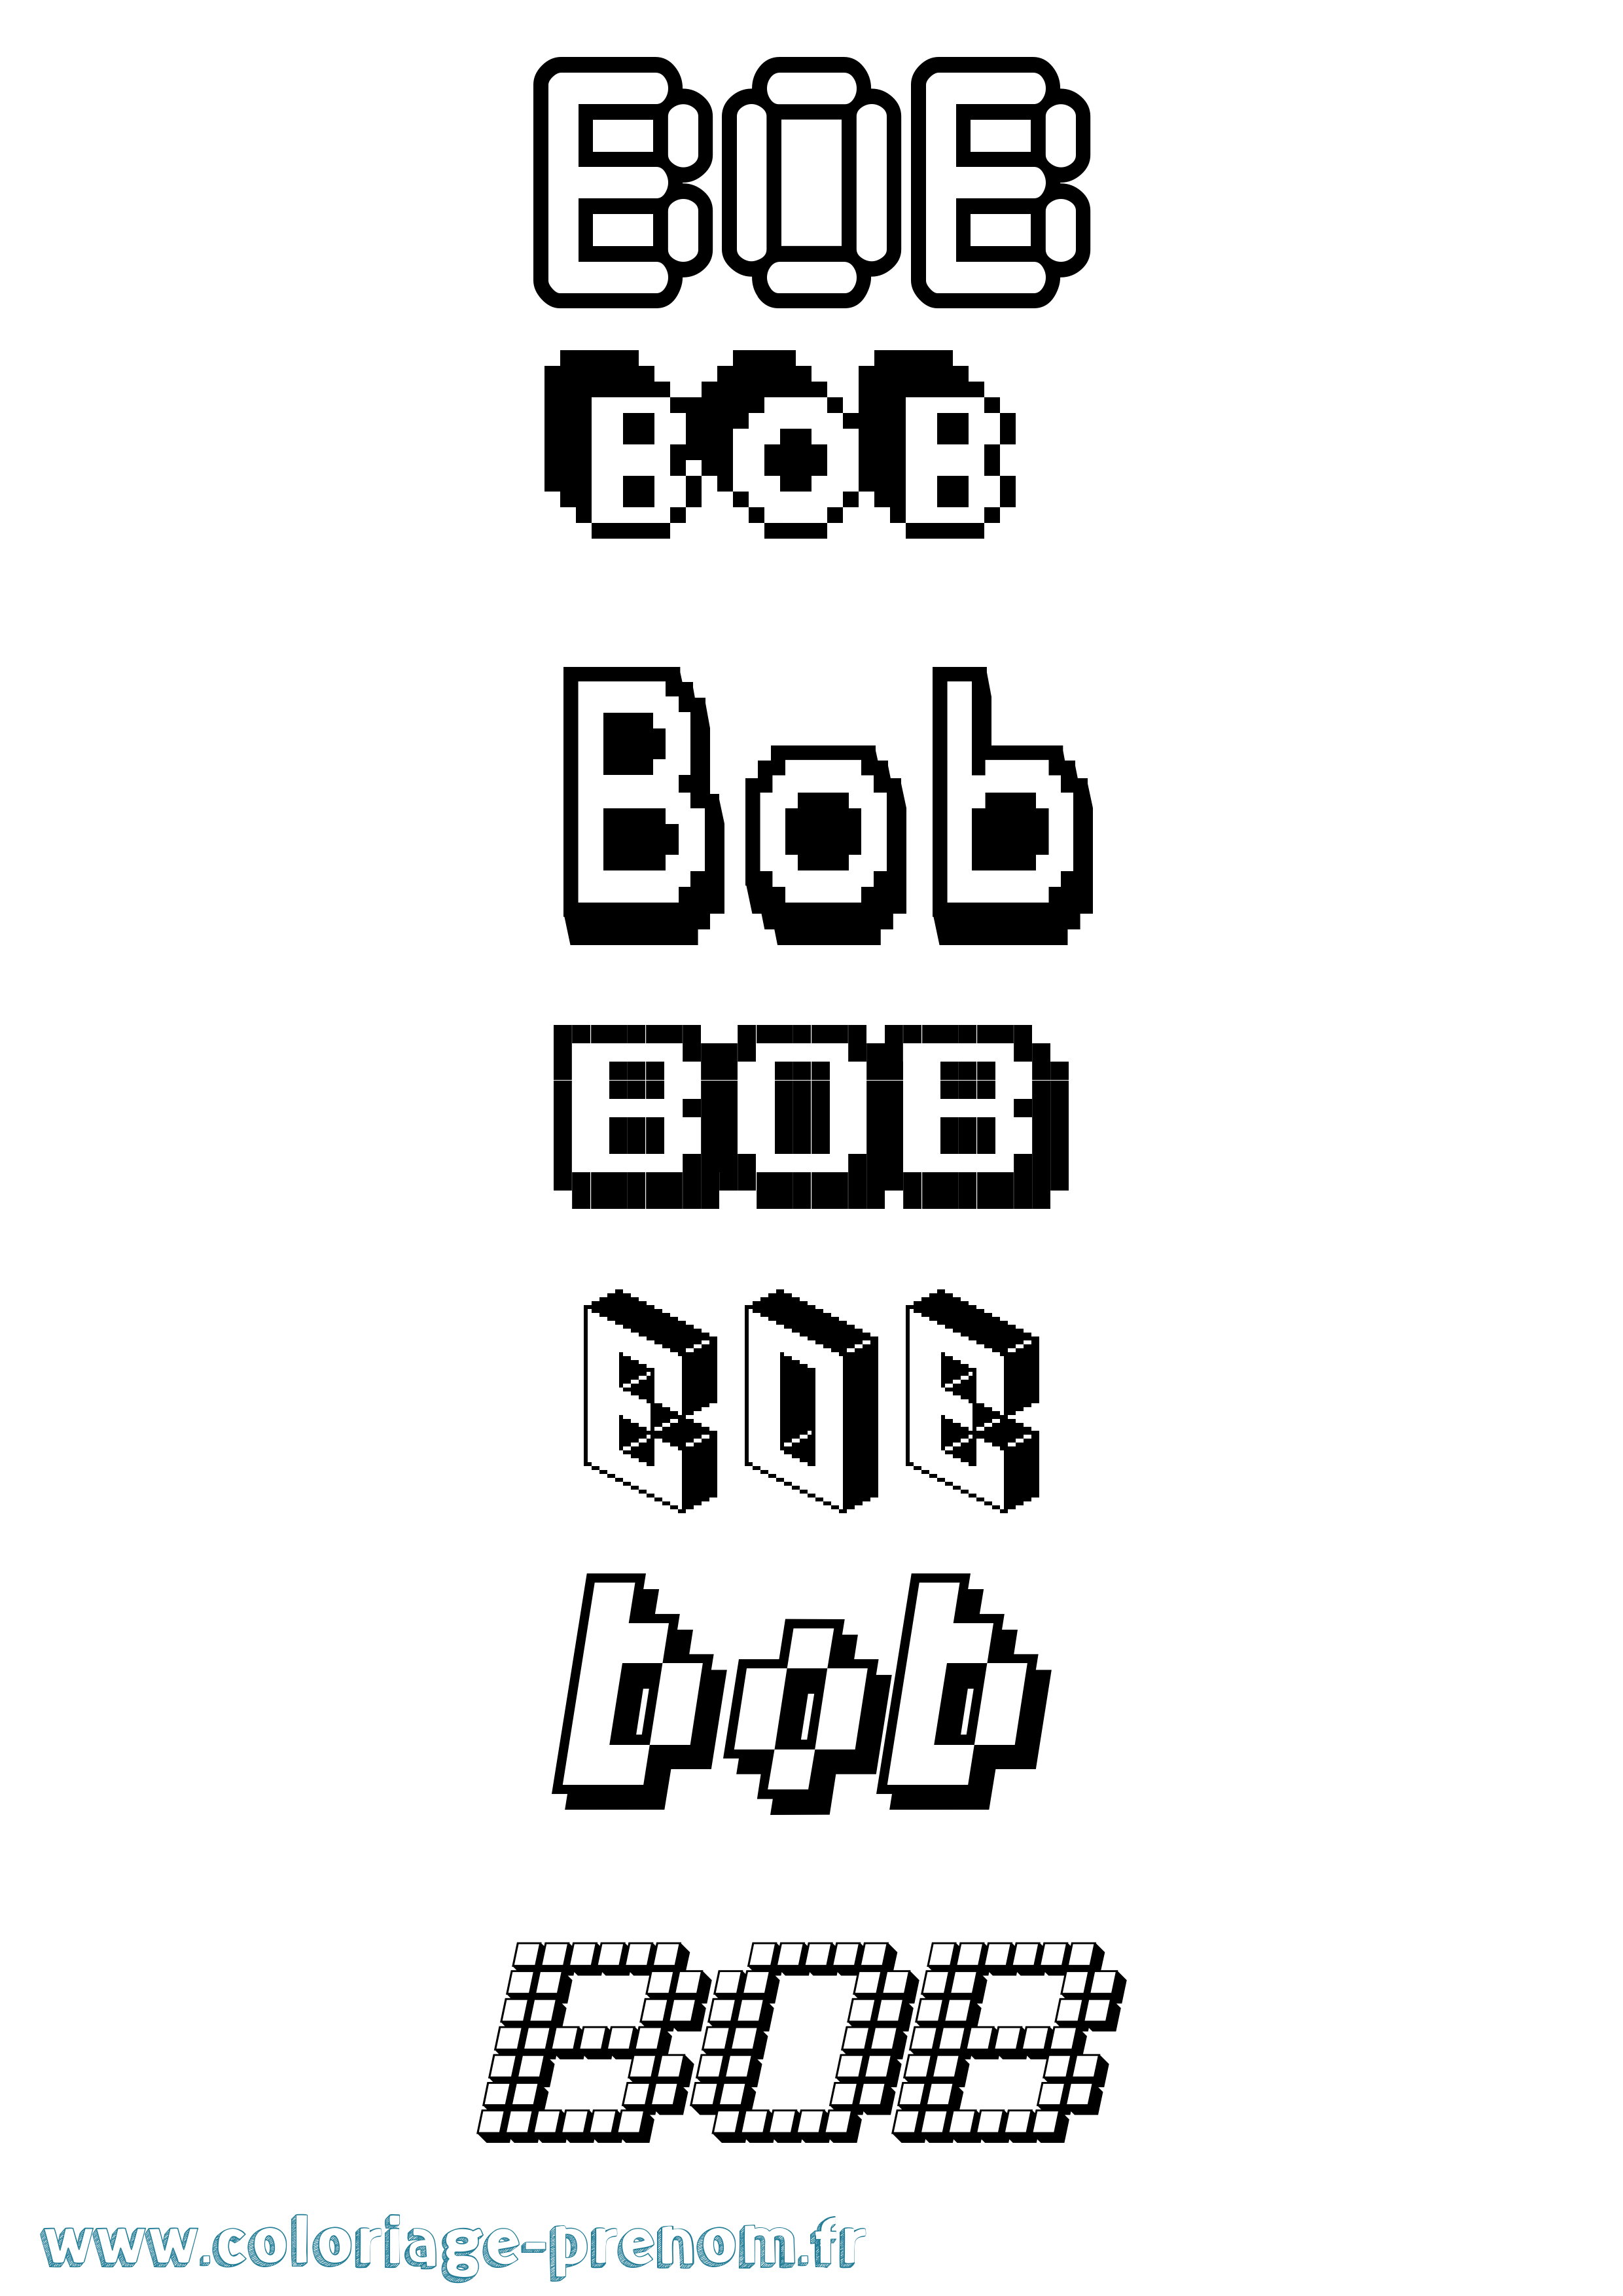 Coloriage prénom Bob Pixel